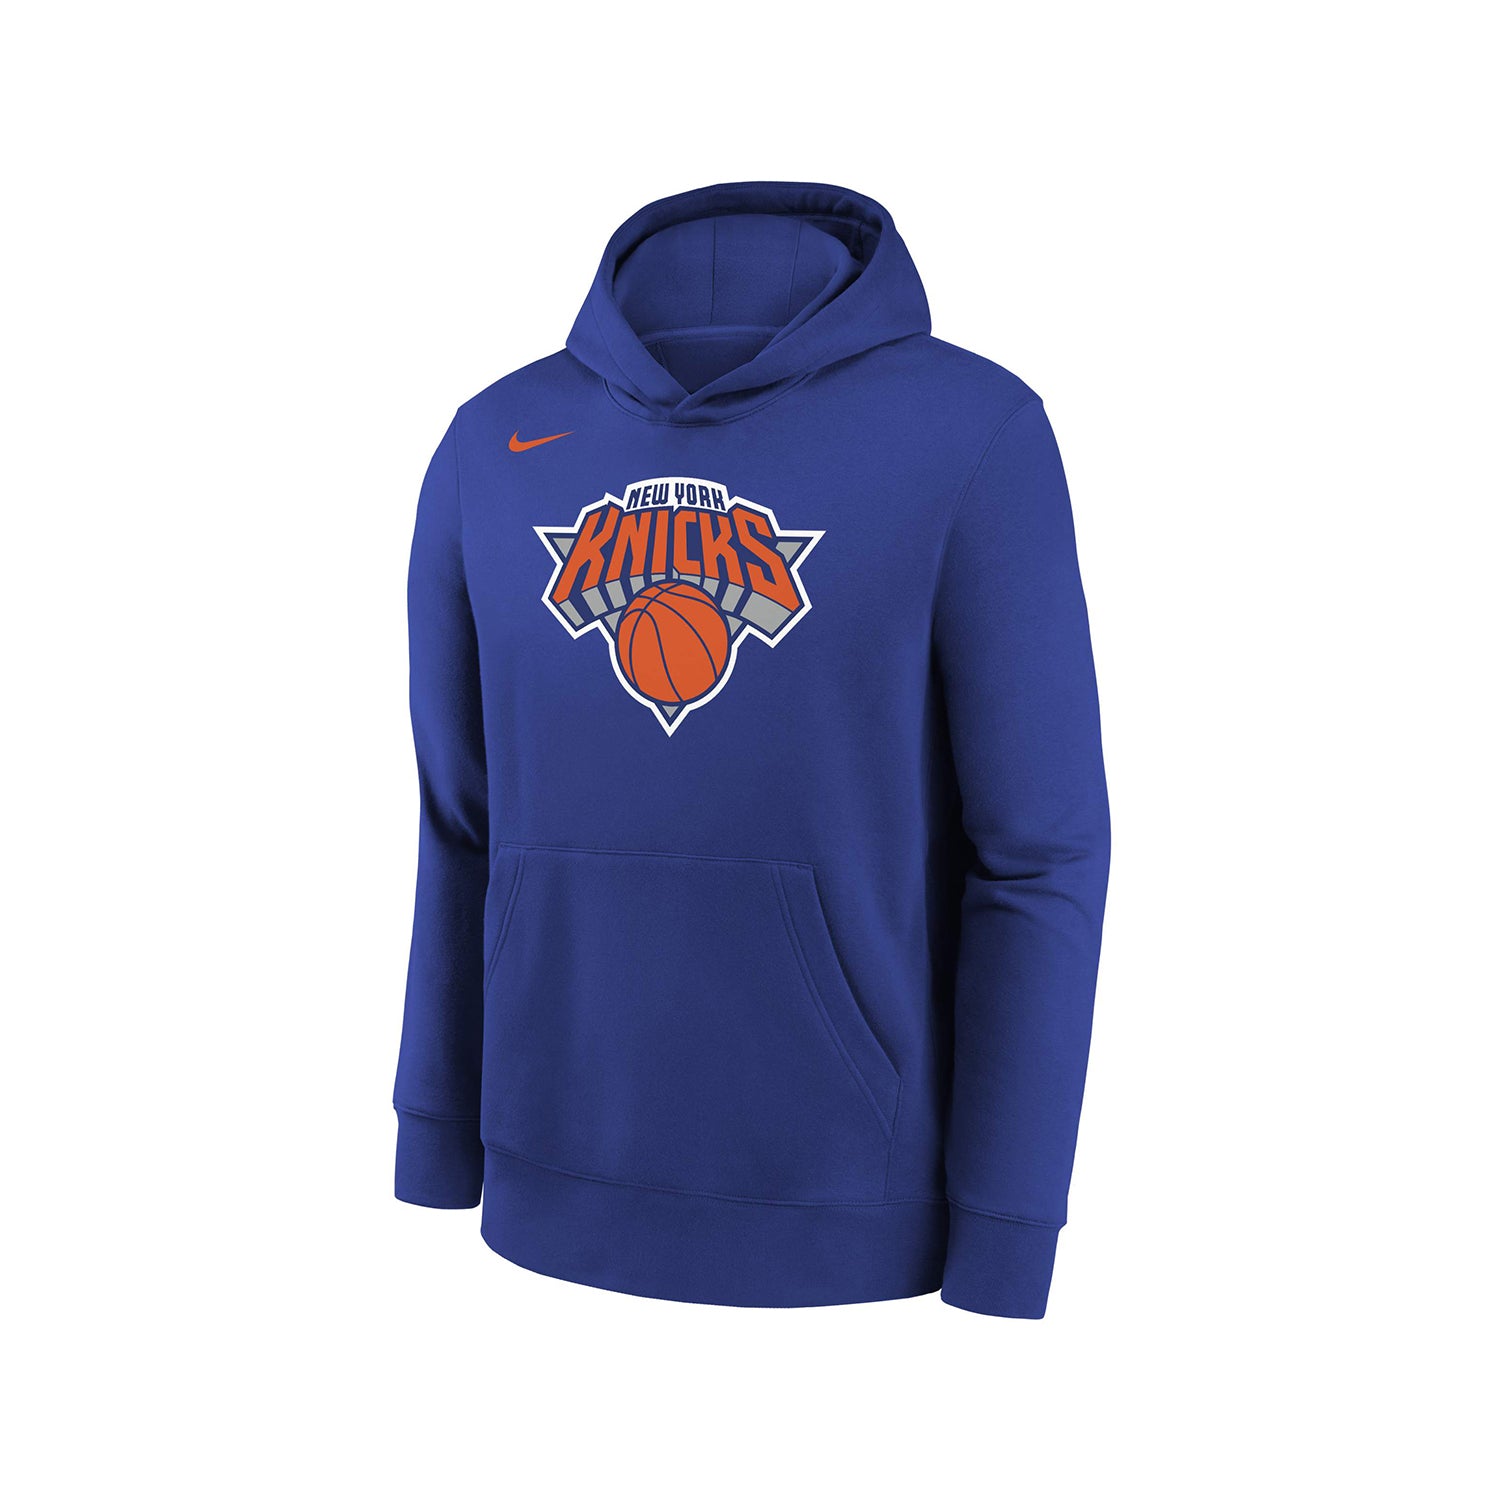 NBA Men's New York Knicks Royal Pullover Hoodie